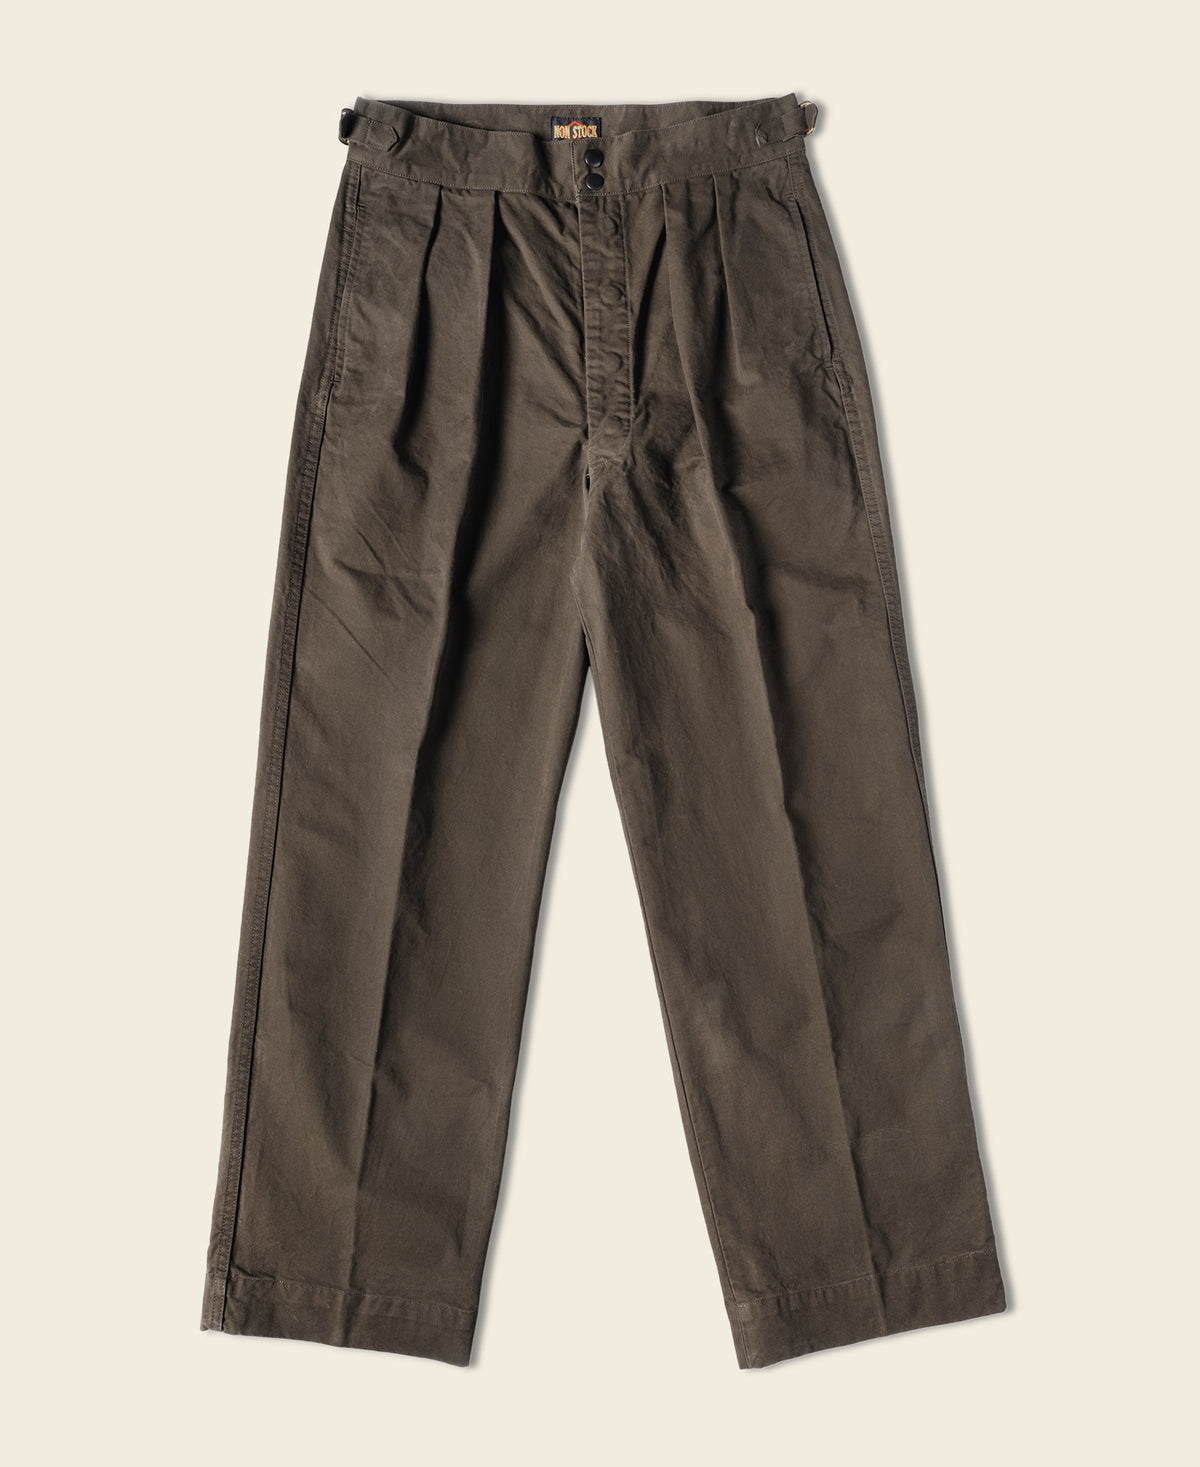 1960s AUS Army Combat Pants - Brown